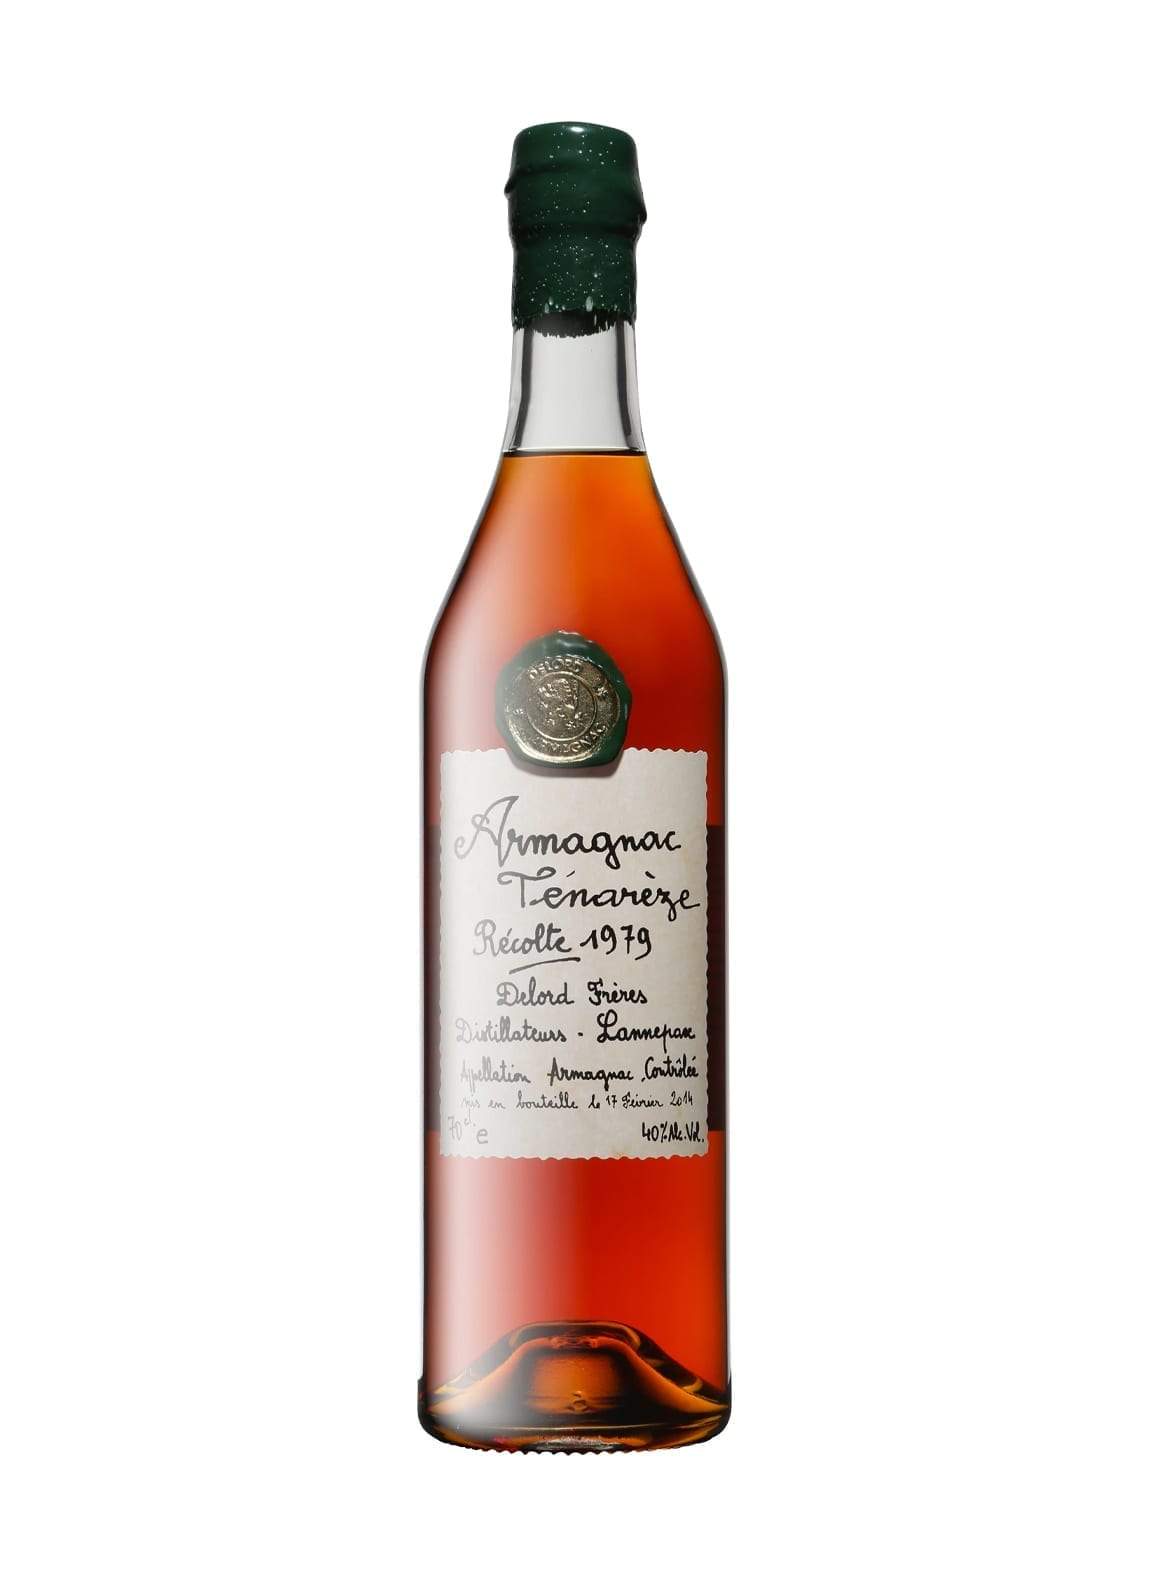 Delord 1979 Armagnac-Tenareze 40% 700ml | Brandy | Shop online at Spirits of France